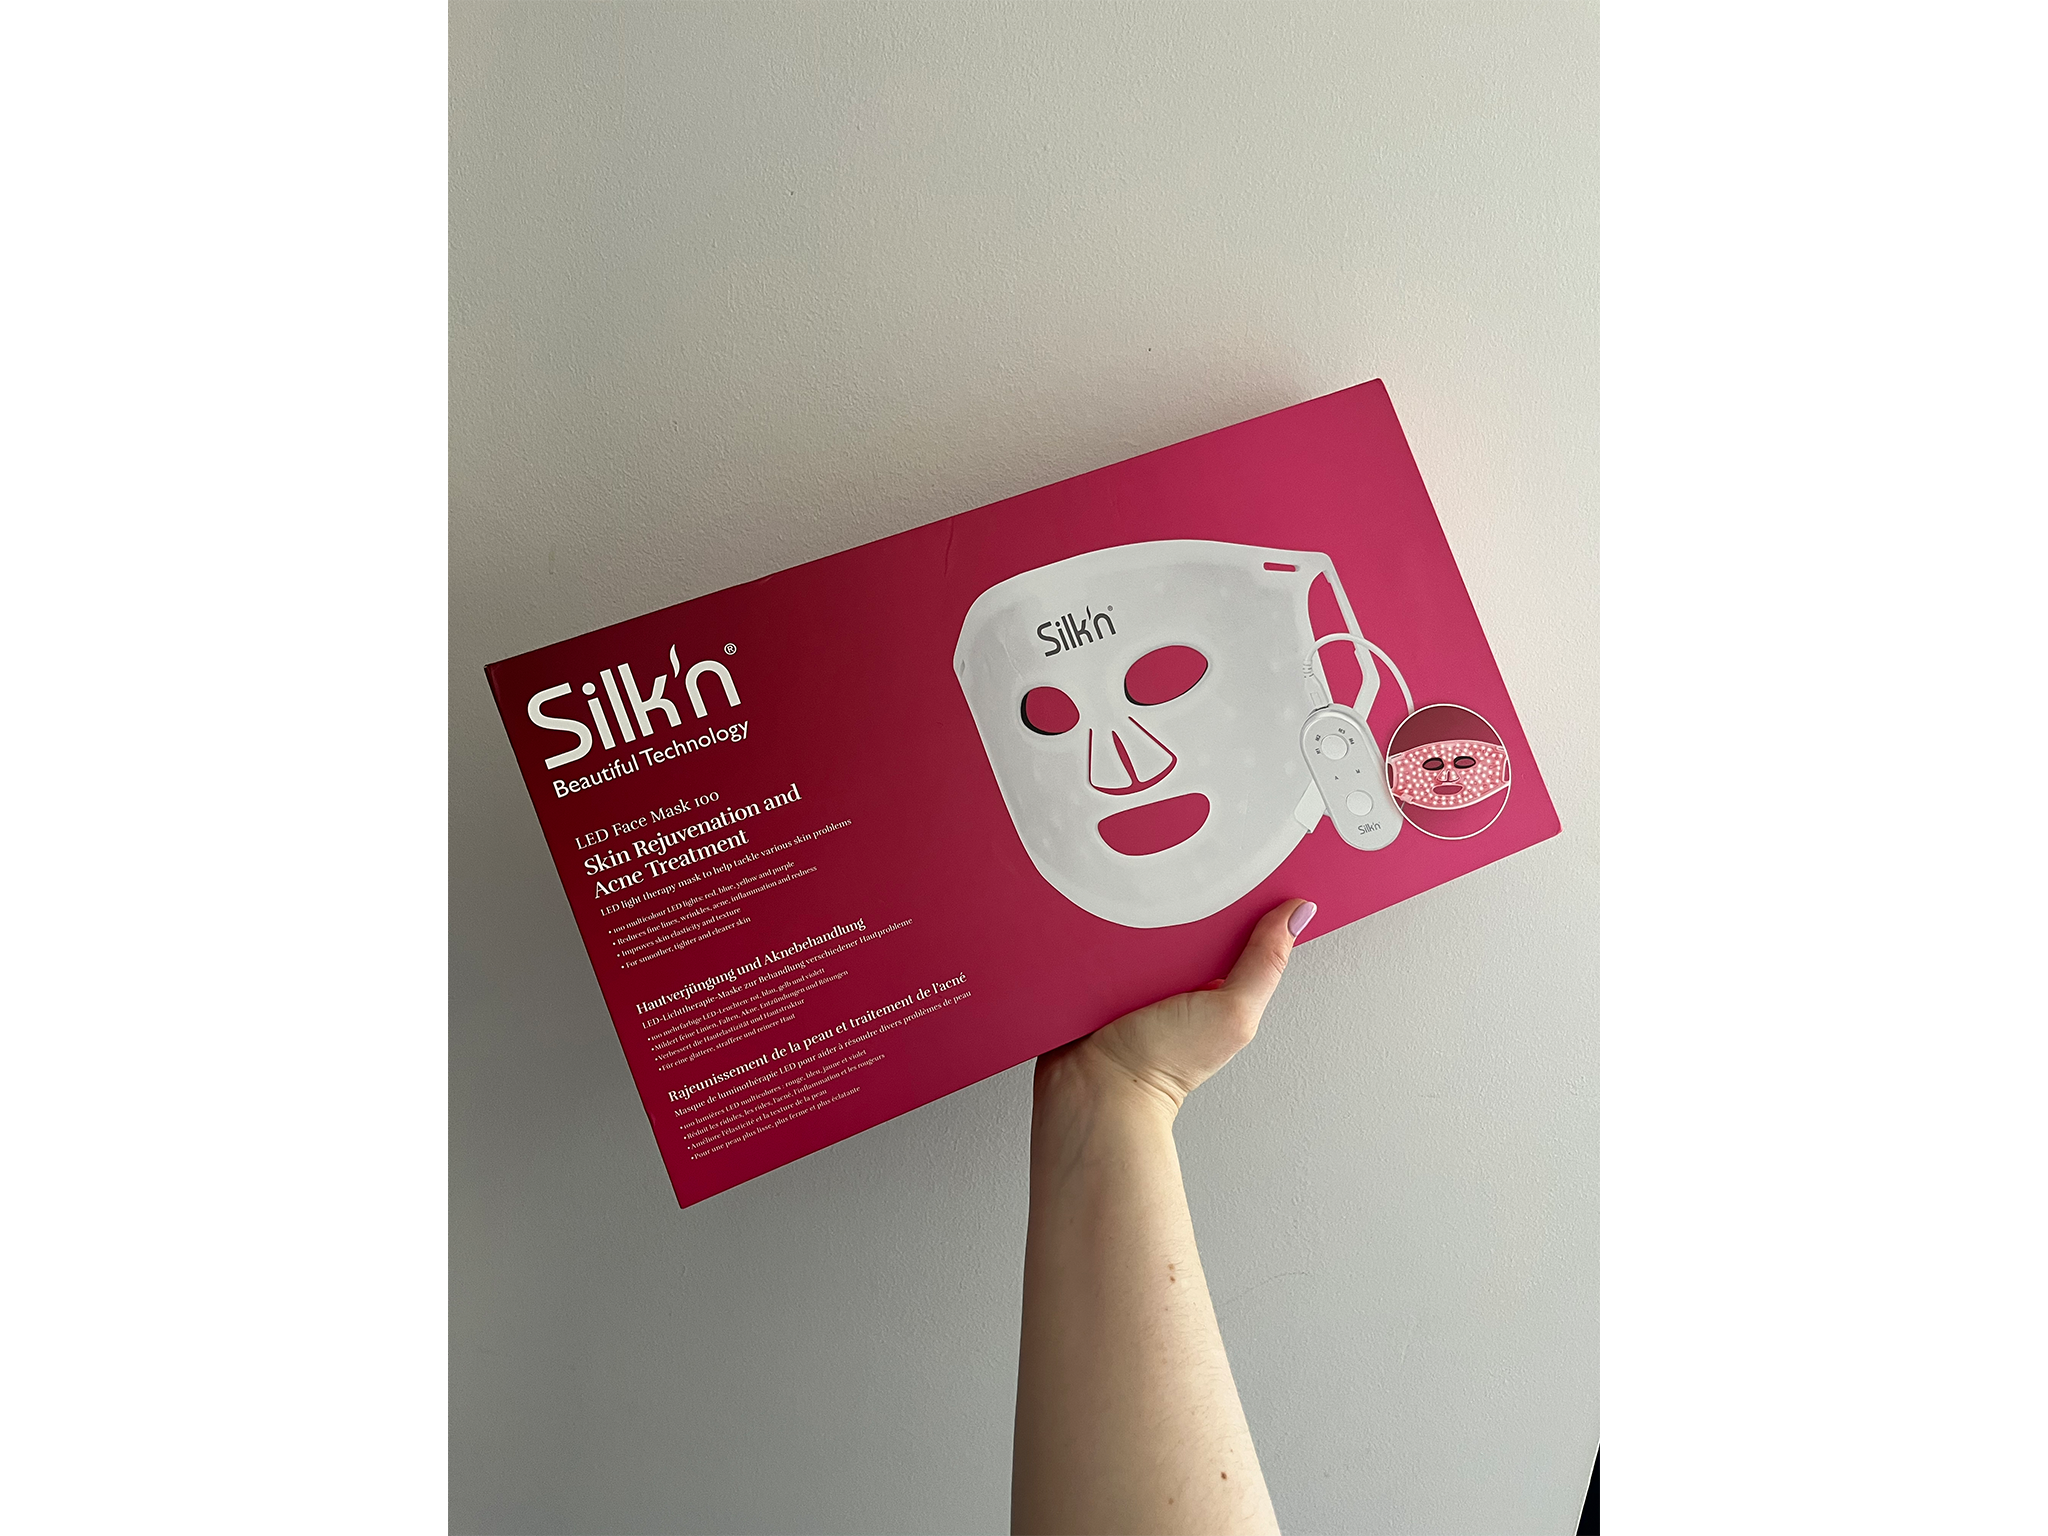 Silk’n LED face mask 100